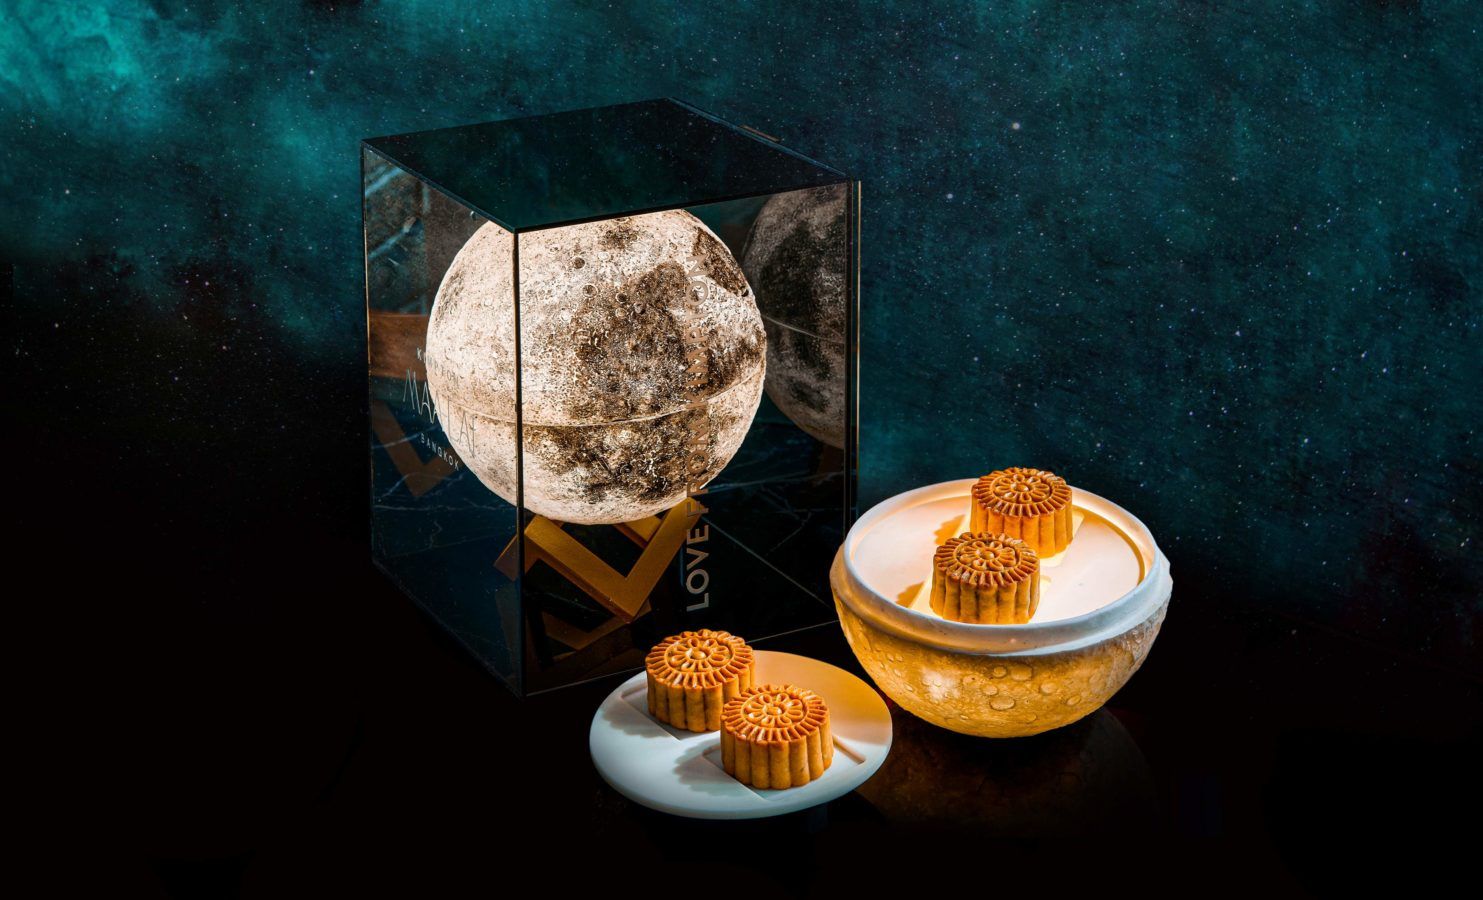 Best Mooncakes For Mid-Autumn Festival 2020